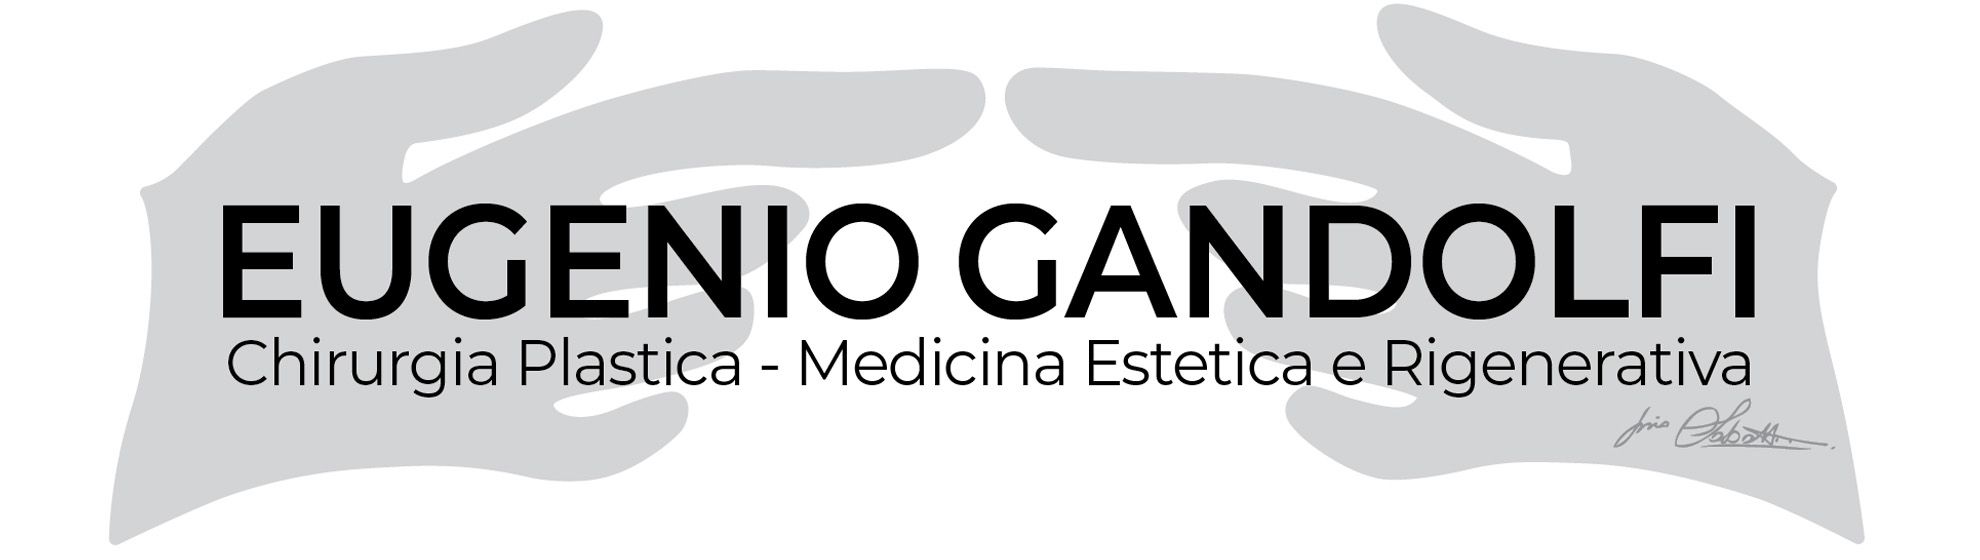 Dott. Eugenio Gandolfi